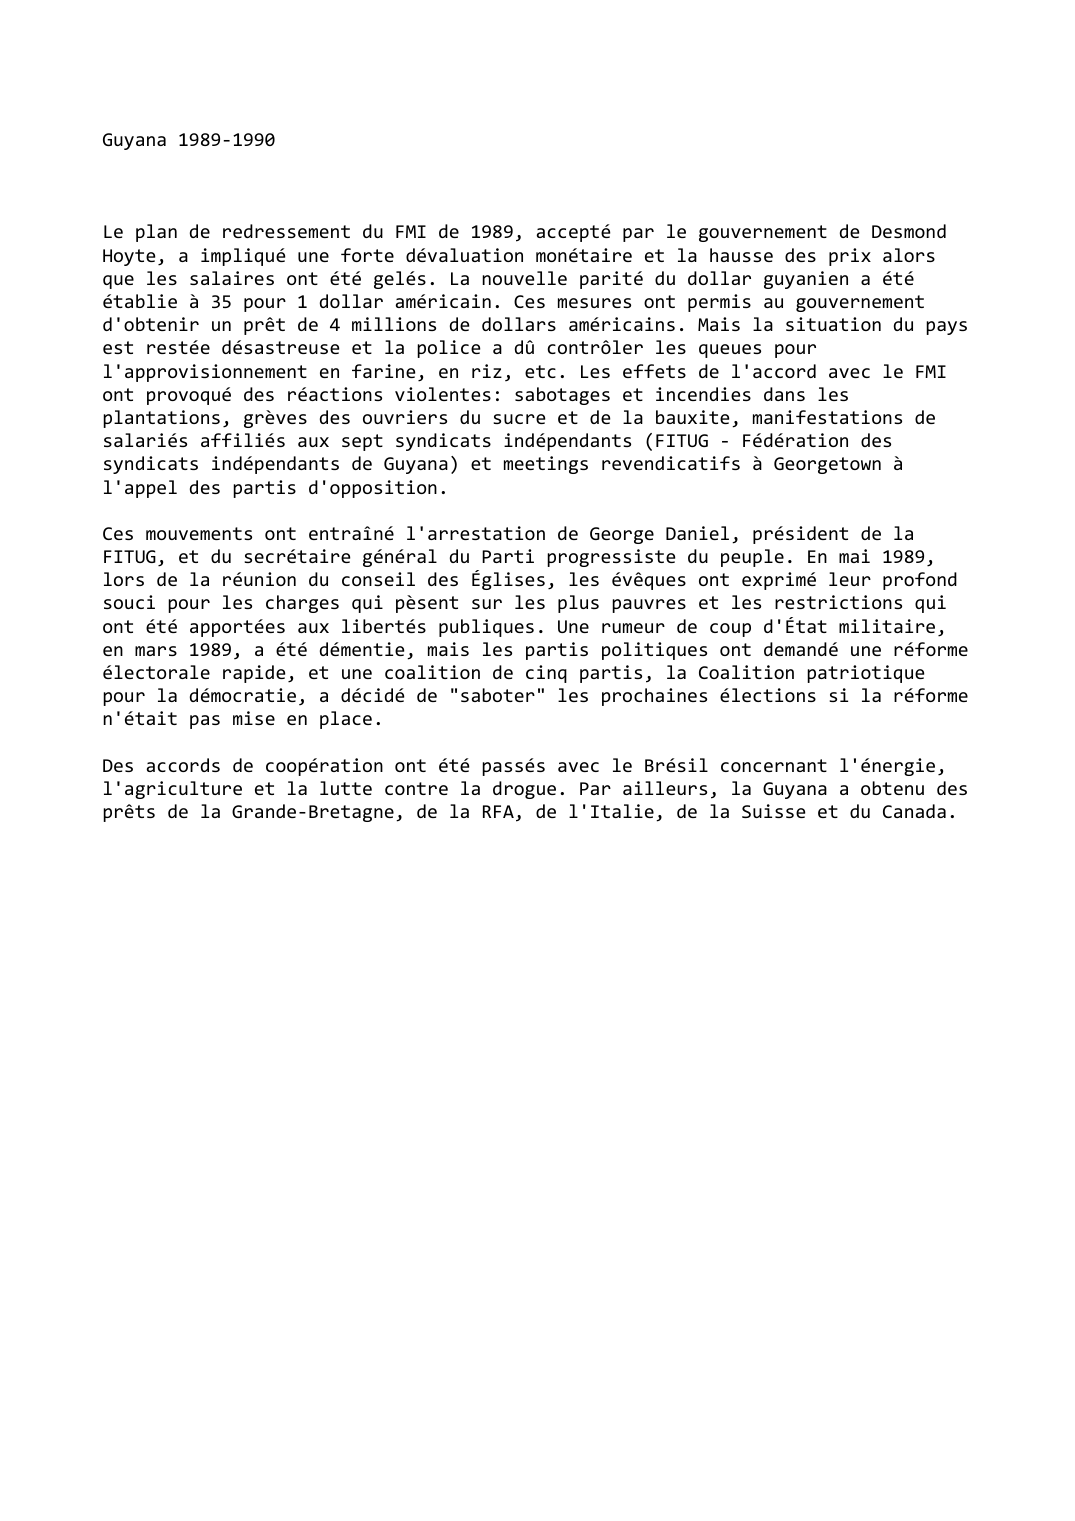 Prévisualisation du document Guyana (1989-1990)